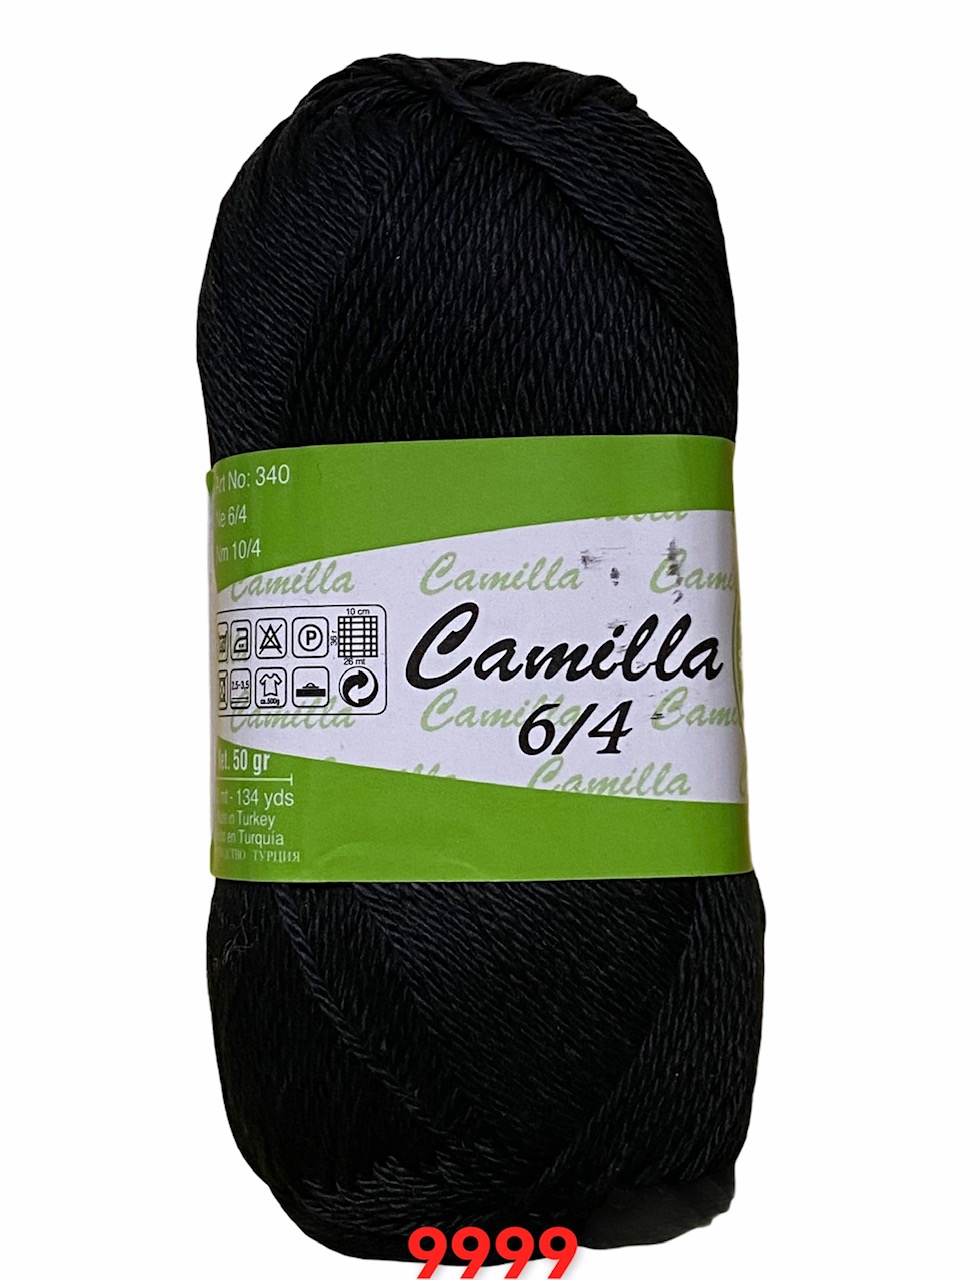 Camilla MTP 50g;9999-čierna